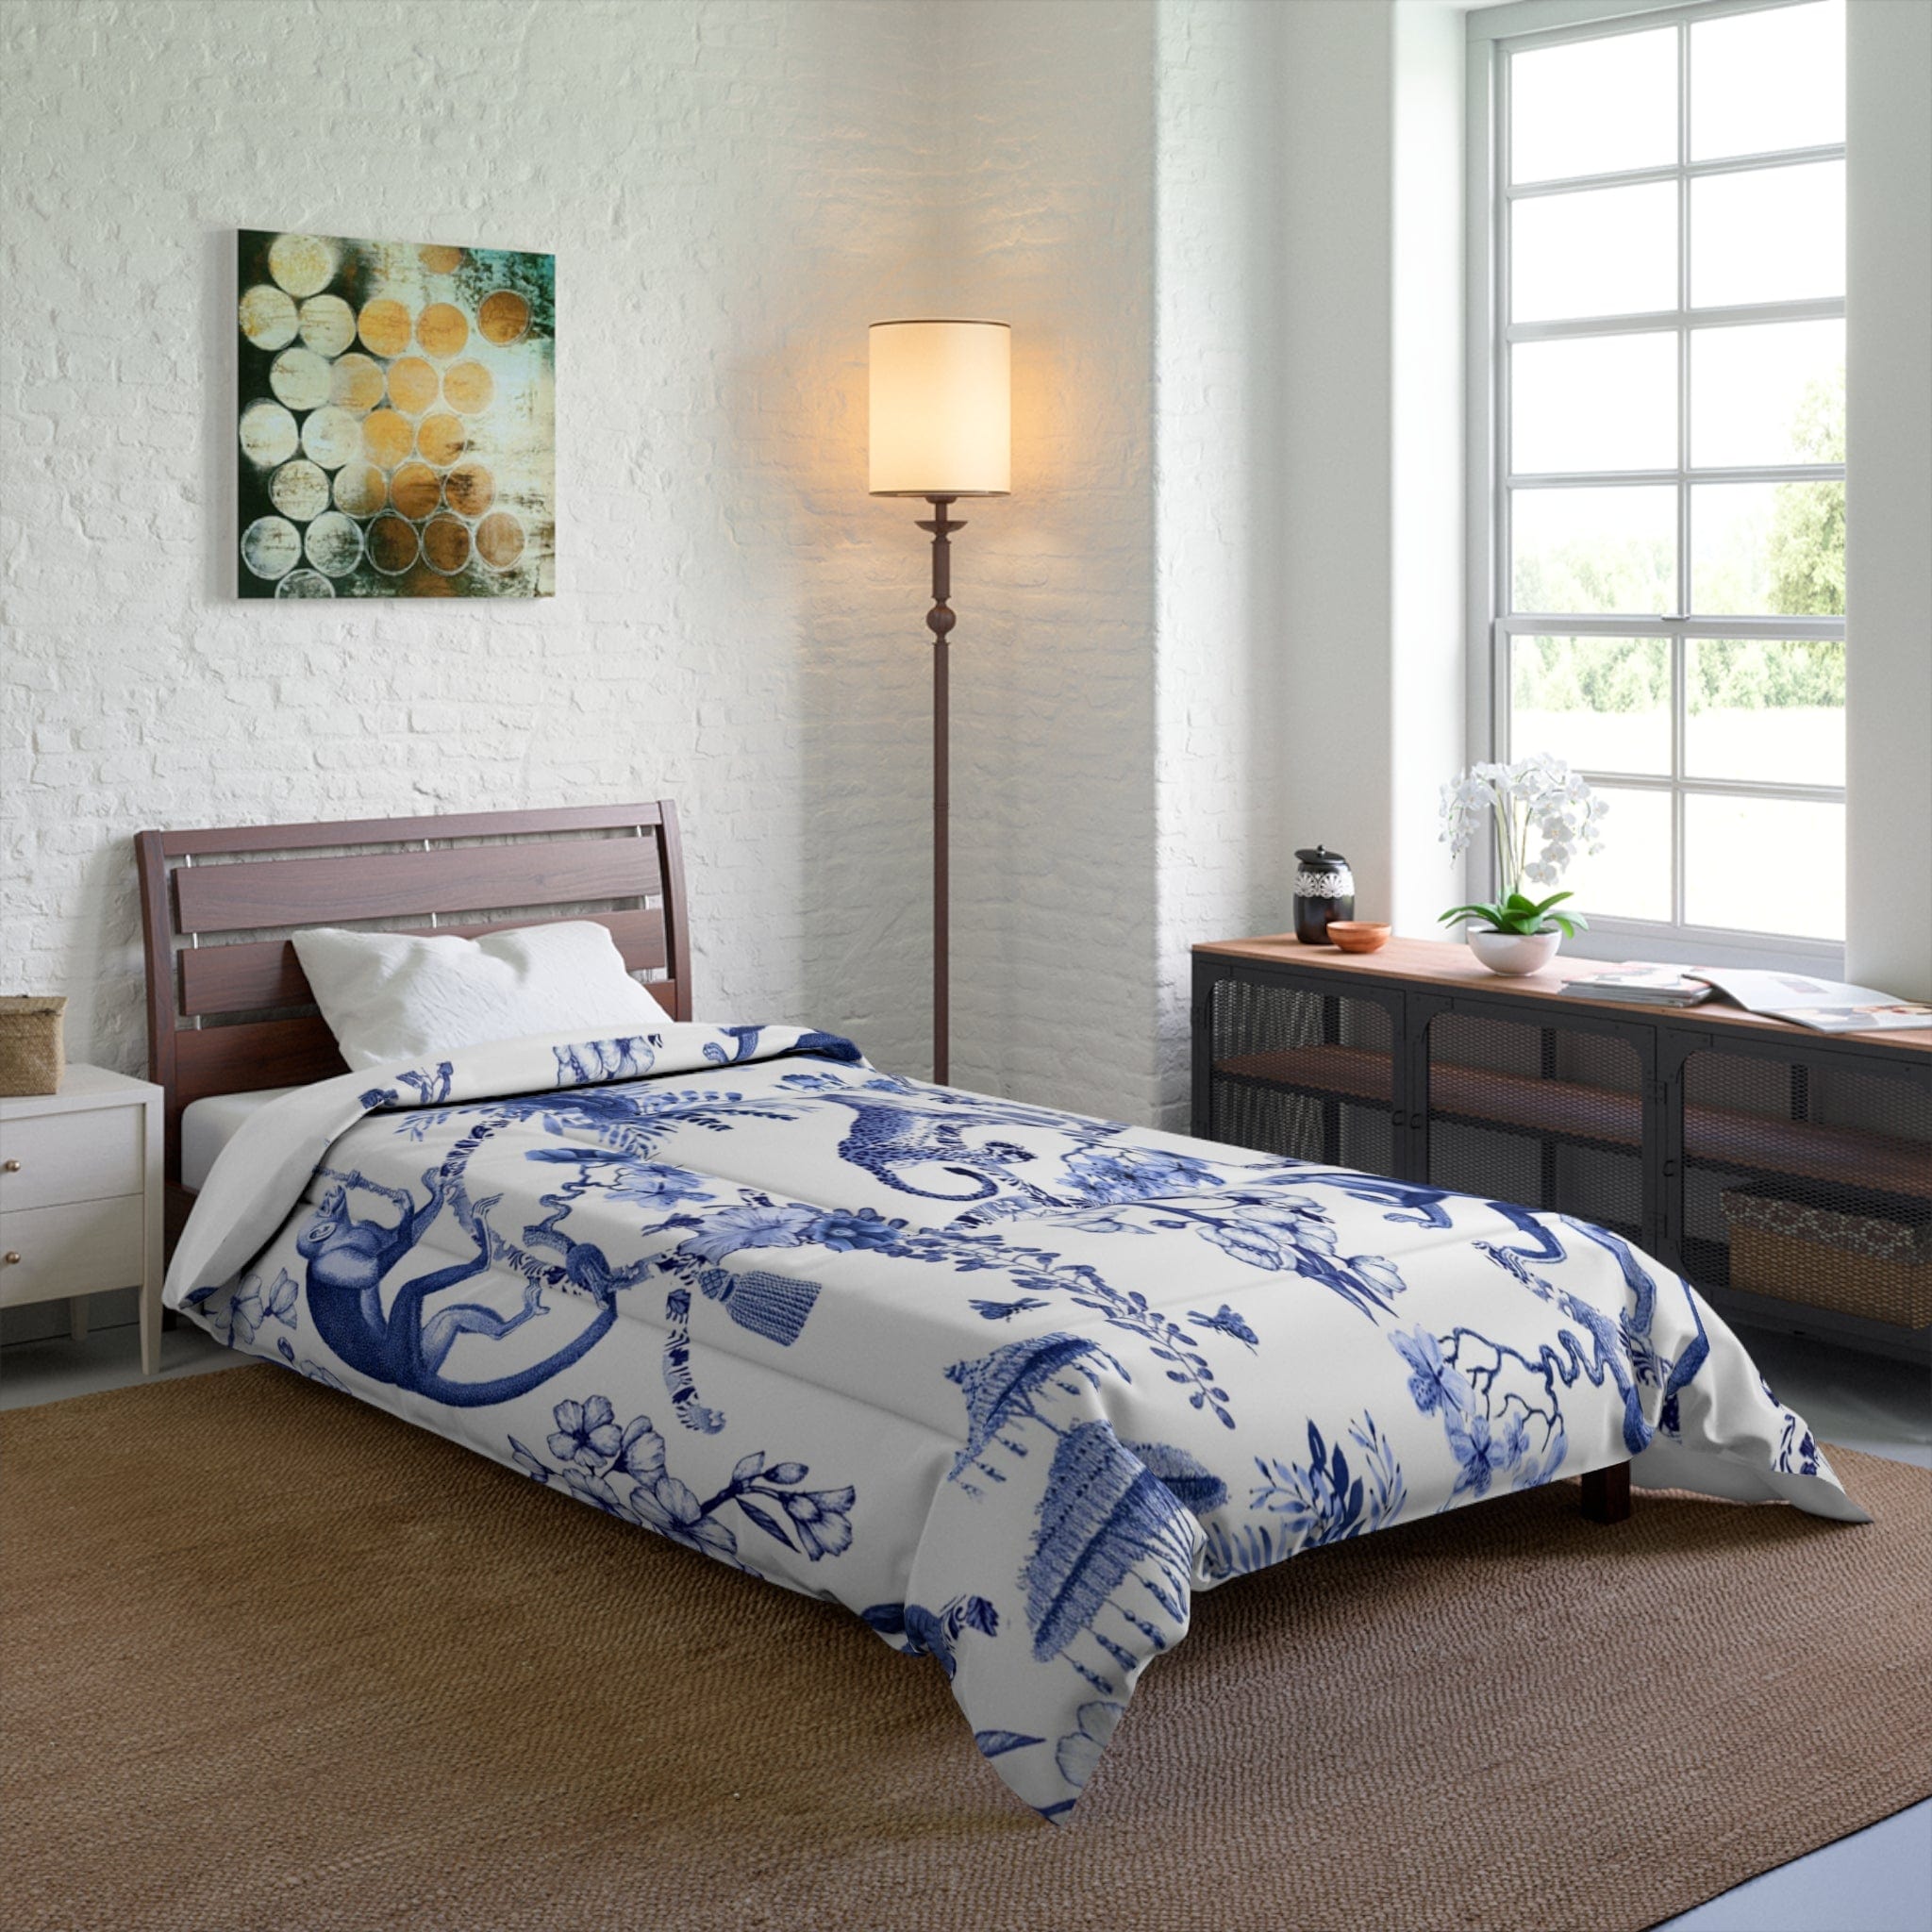 Kate McEnroe New York Floral Blue and White Chinoiserie Jungle Botanical Toile ComforterComforters31736806517057842393